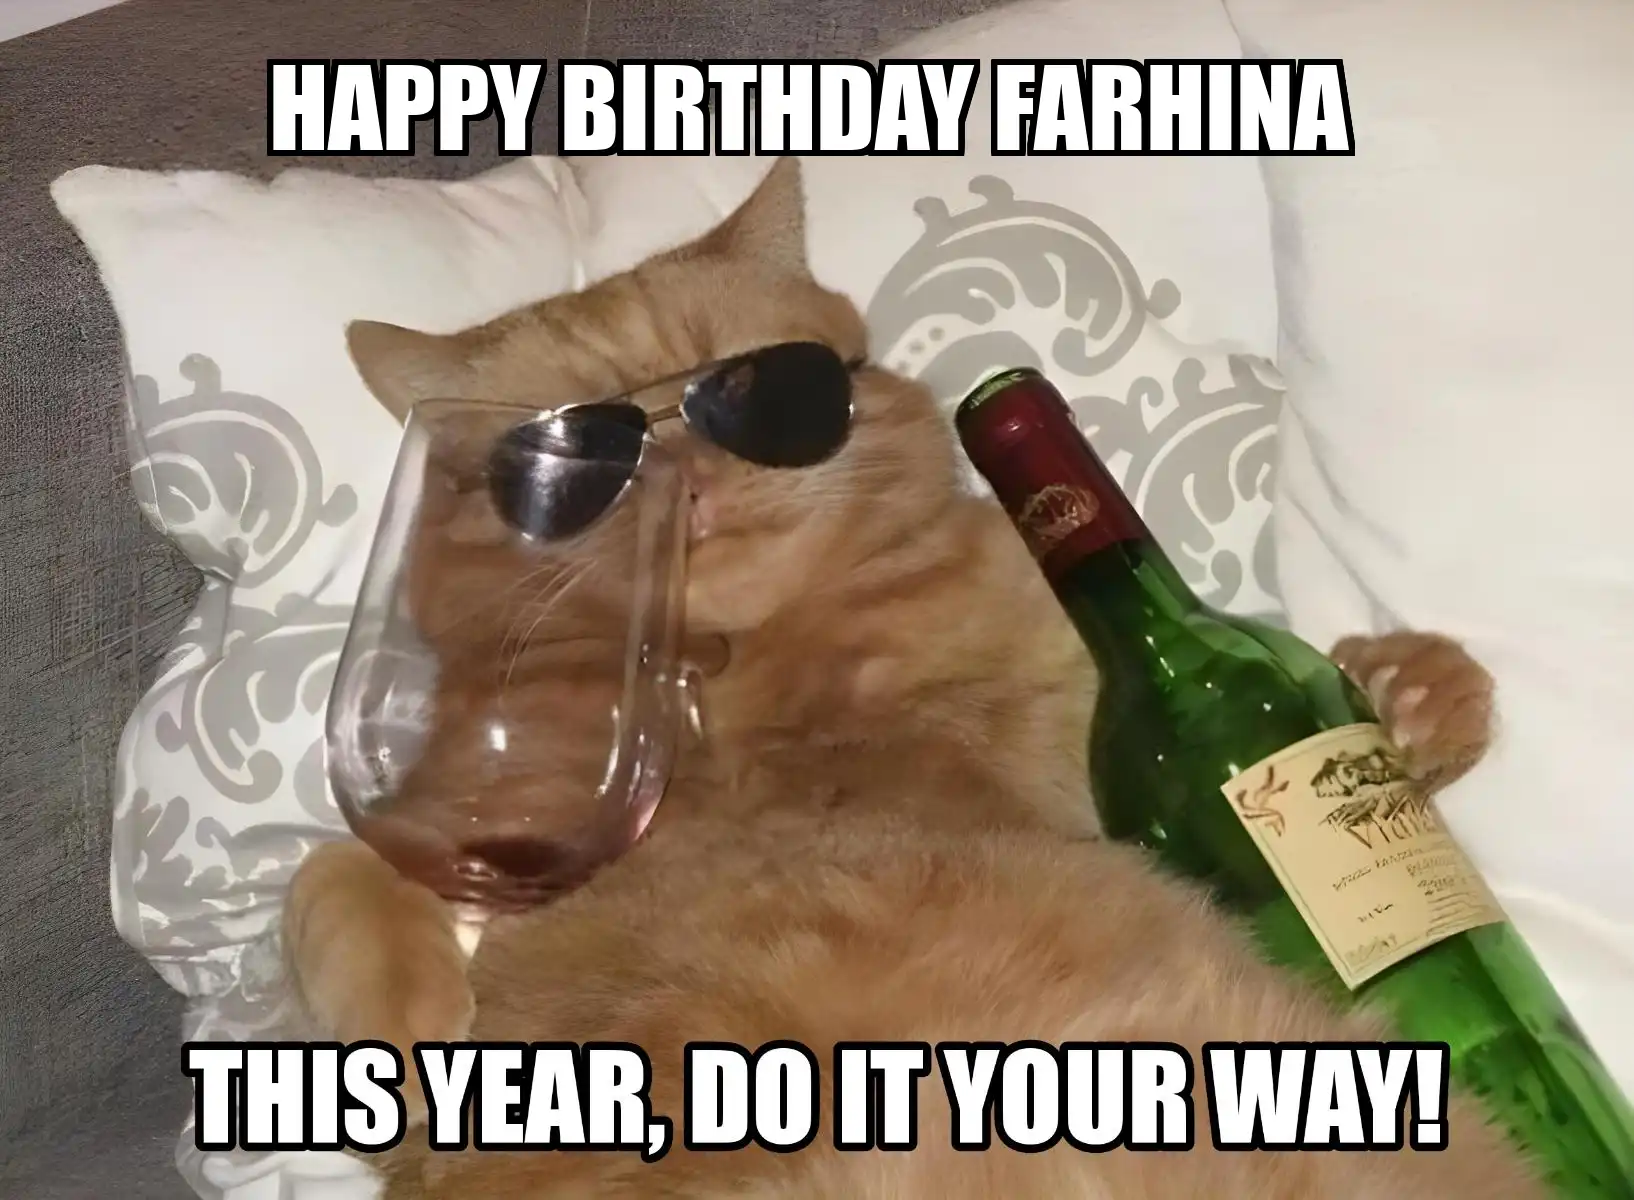 Happy Birthday Farhina This Year Do It Your Way Meme